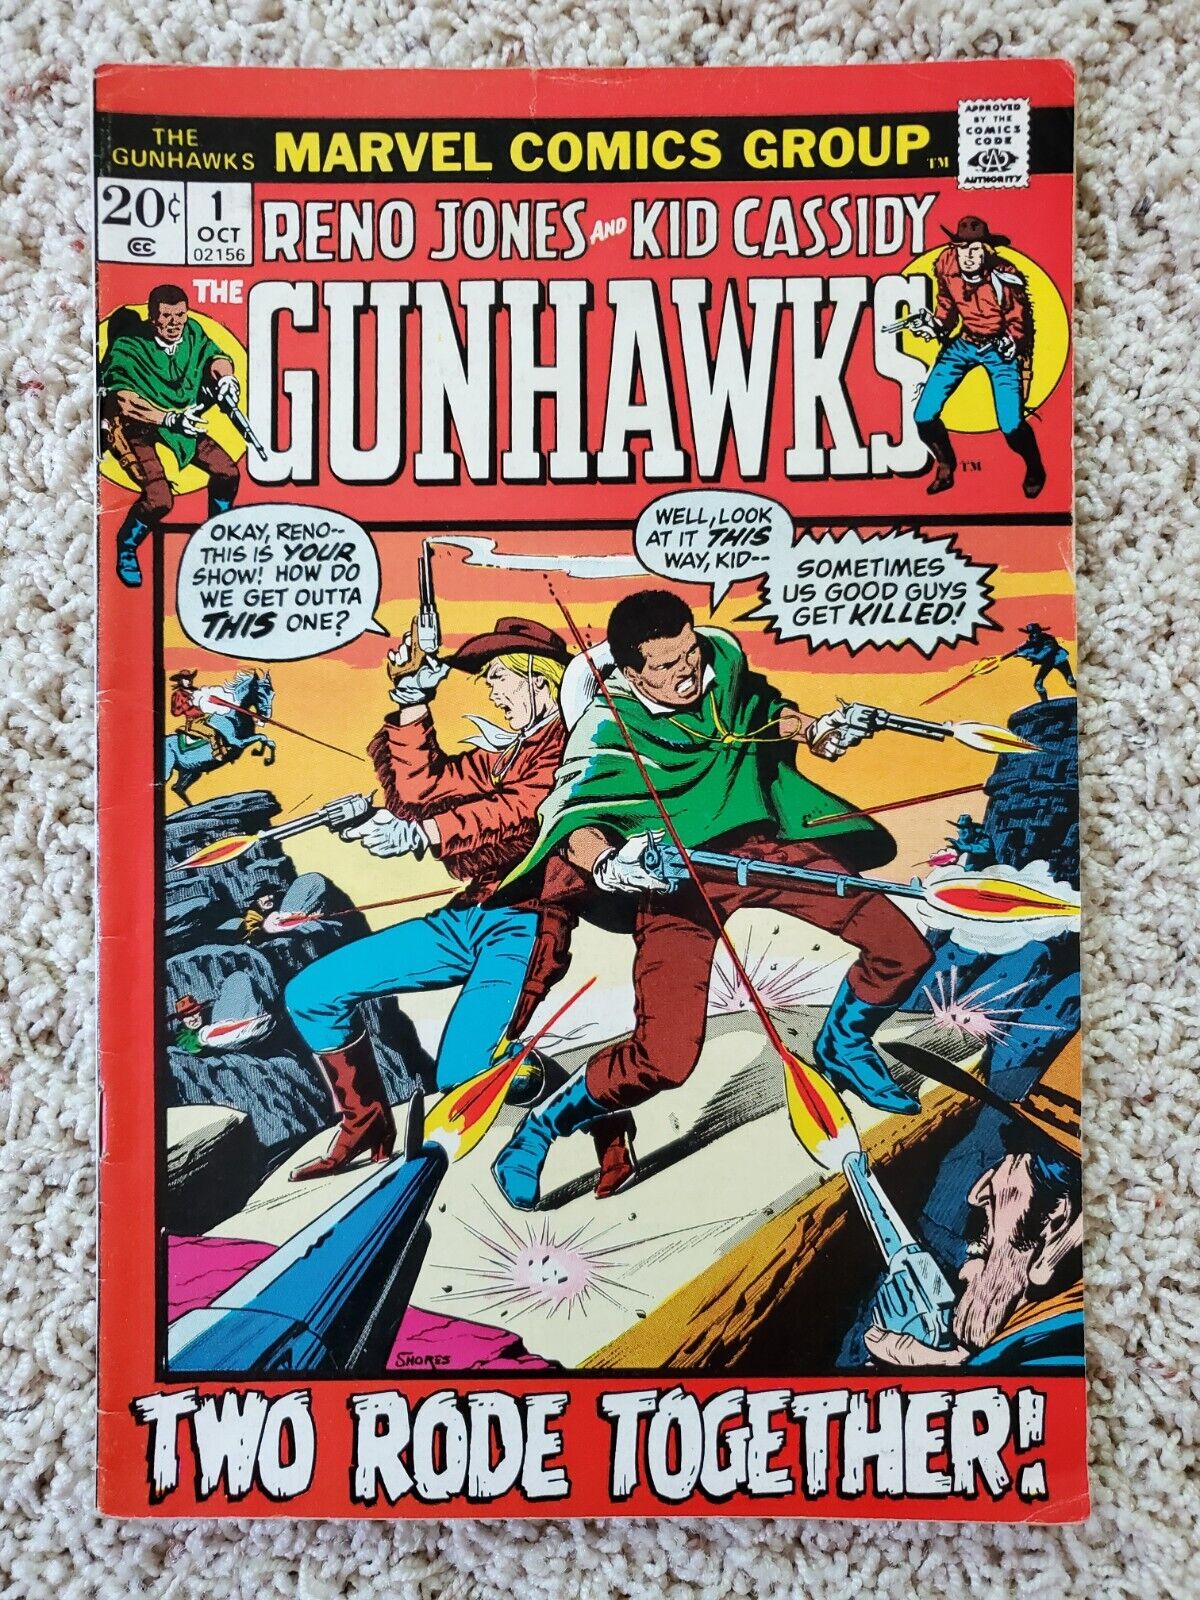 THE GUNHAWKS #1 (Marvel Comics 1972) 1st App Appearance RENO JONES + KID CASSIDY